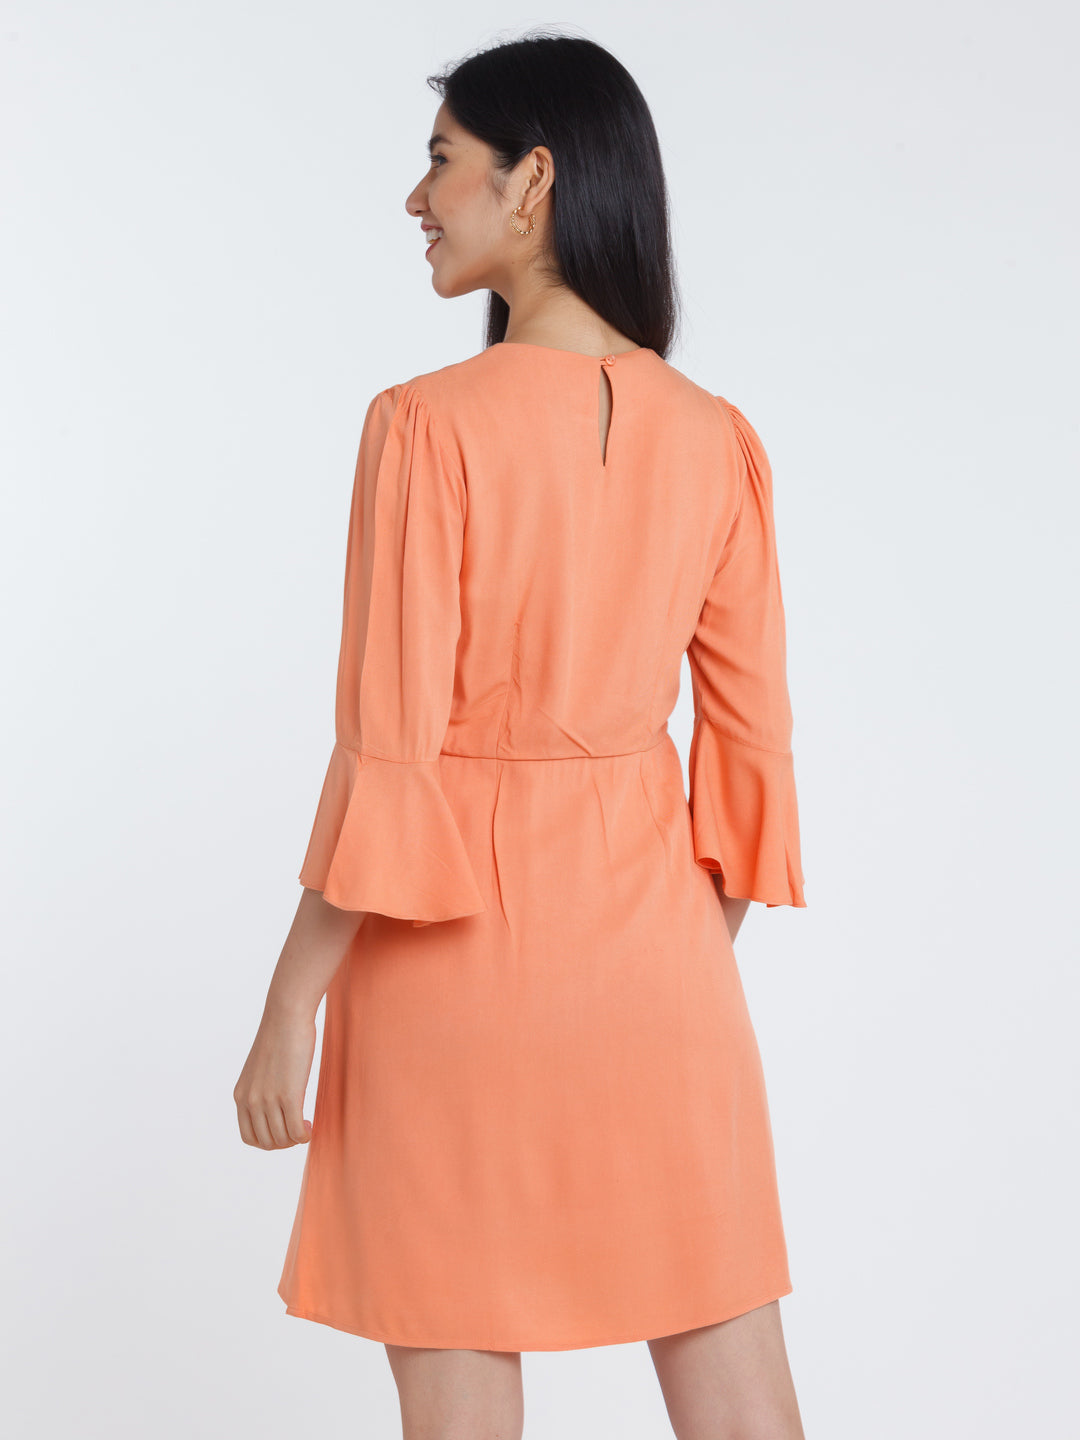 Orange Solid Short Dress For Women